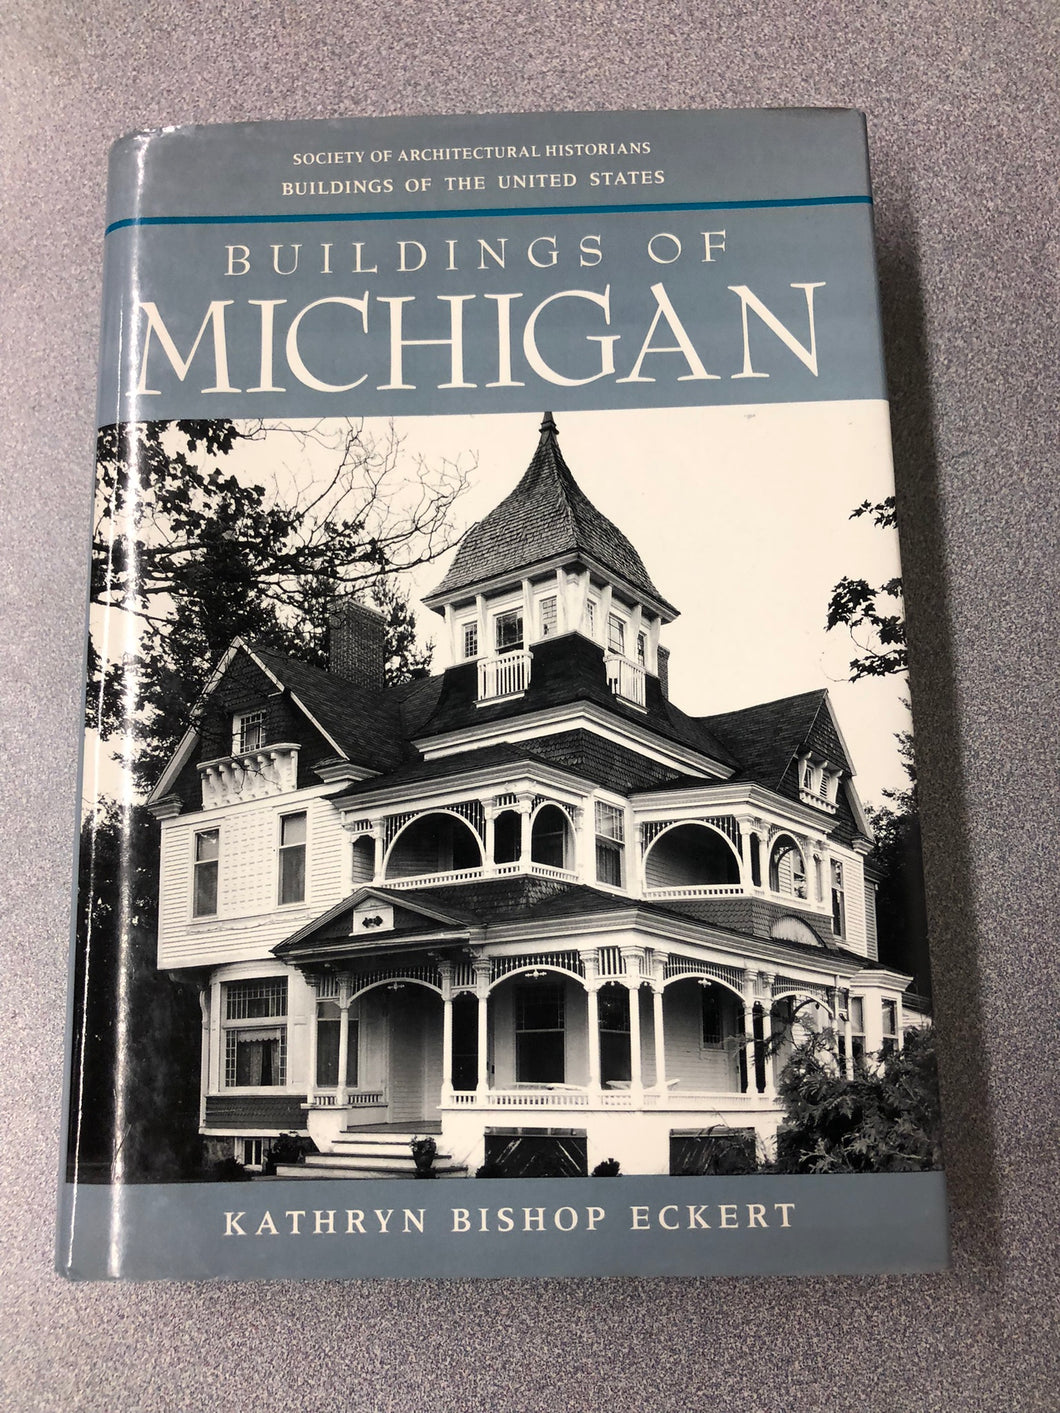 Buildings of Michigan, Eckert, Kathryn Bishop, [1993] MI 9/22